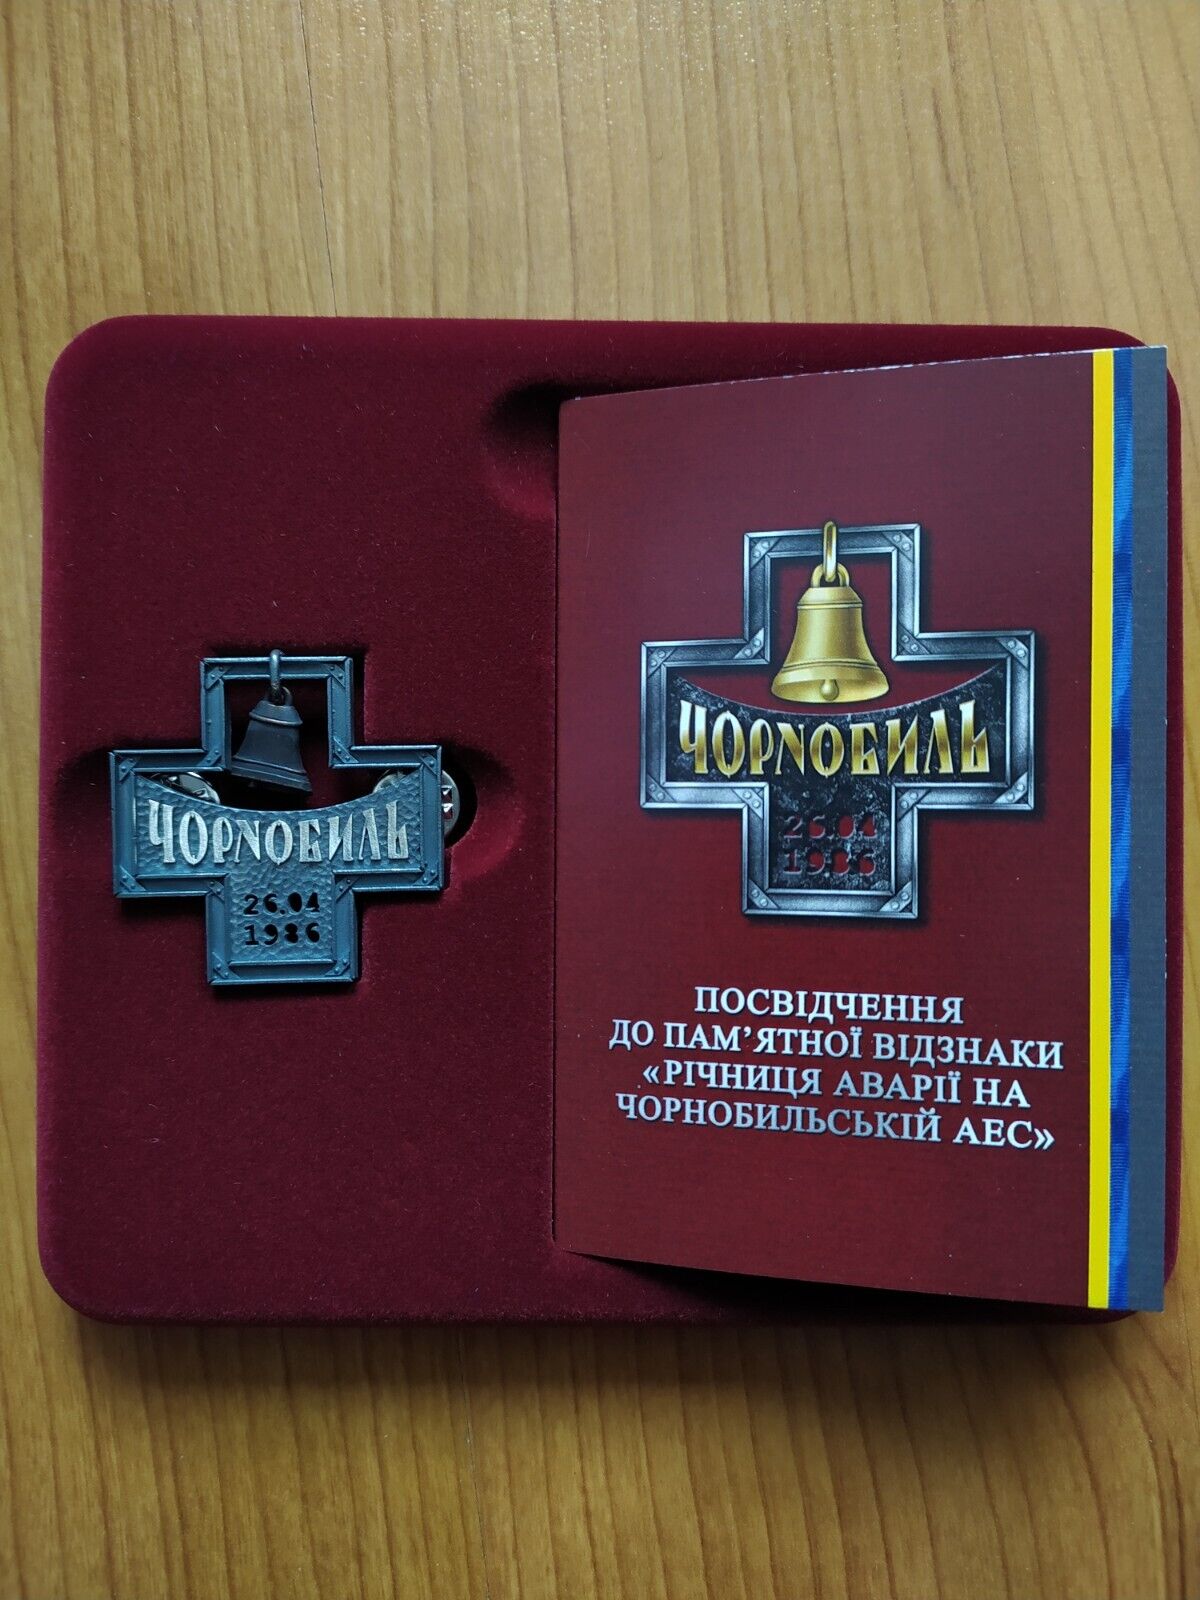 CHERNOBYL LIQUIDATOR of Nuclear disaster Badge Pin